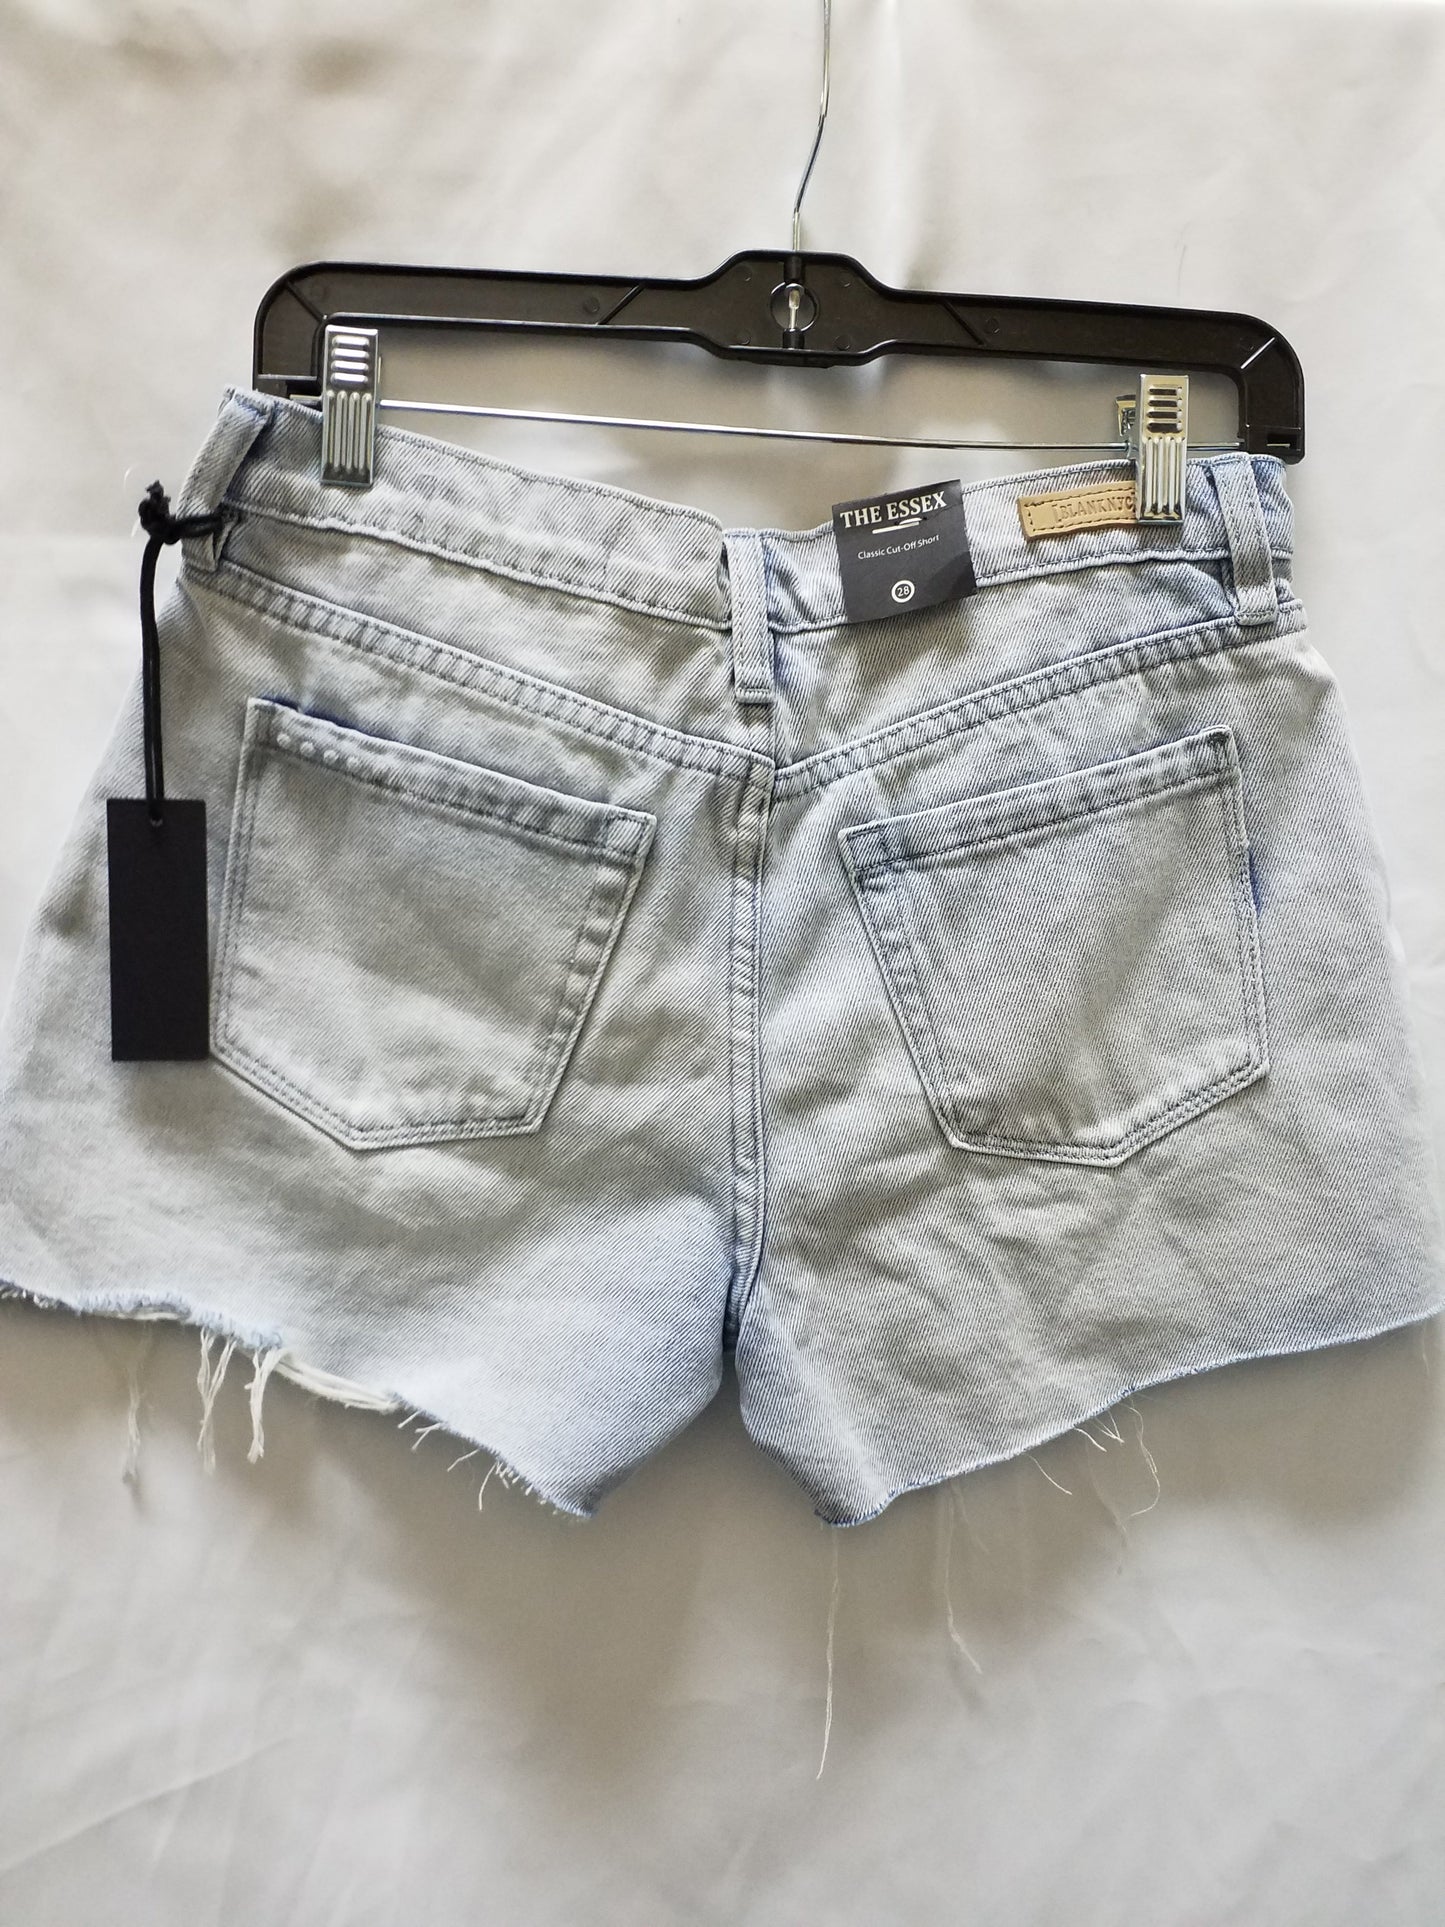 Shorts By Blanknyc  Size: 6